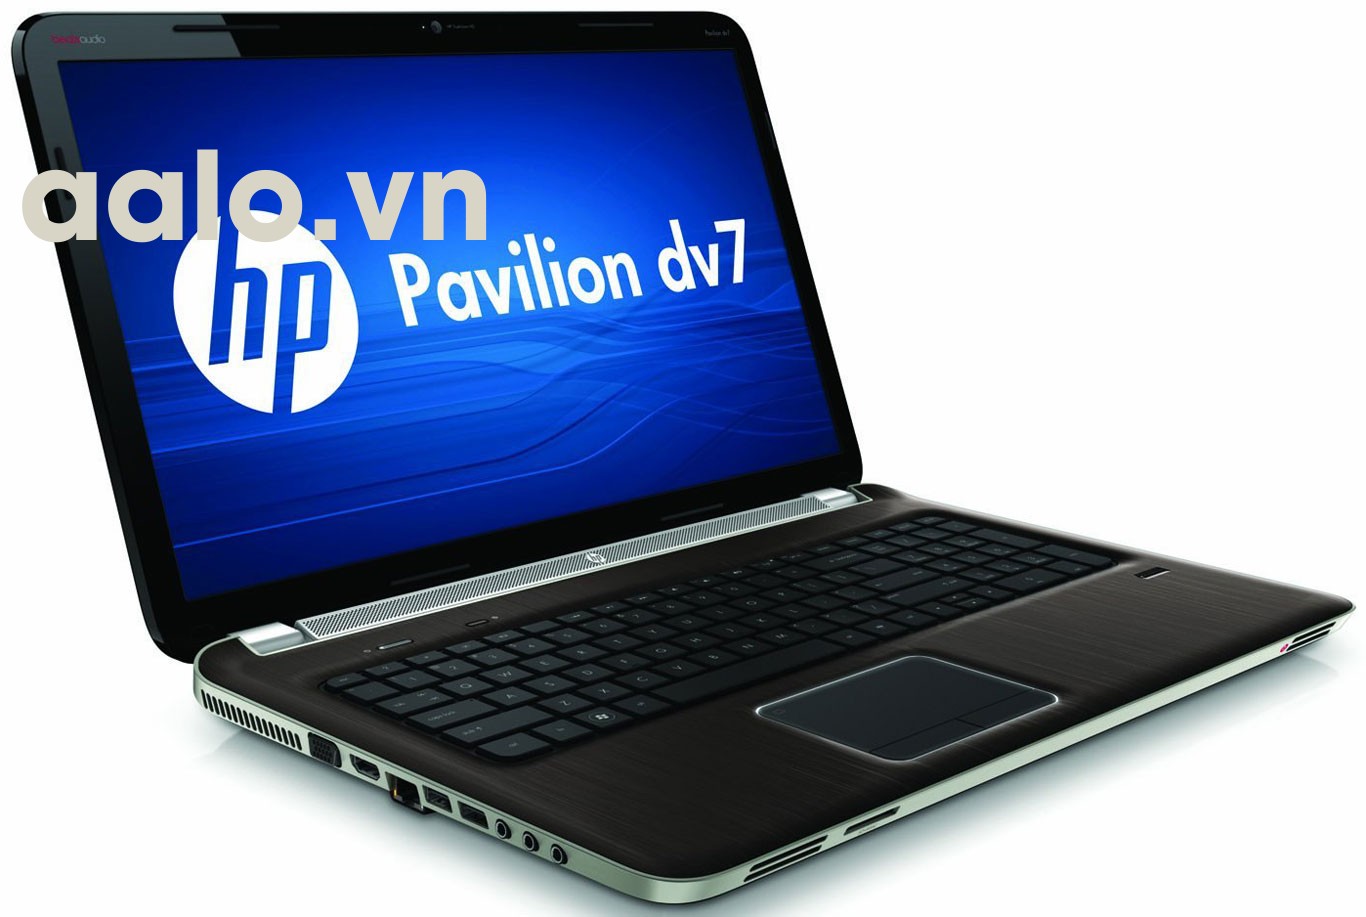 Bàn phím laptop HP DV7-6000 - keyboard HP